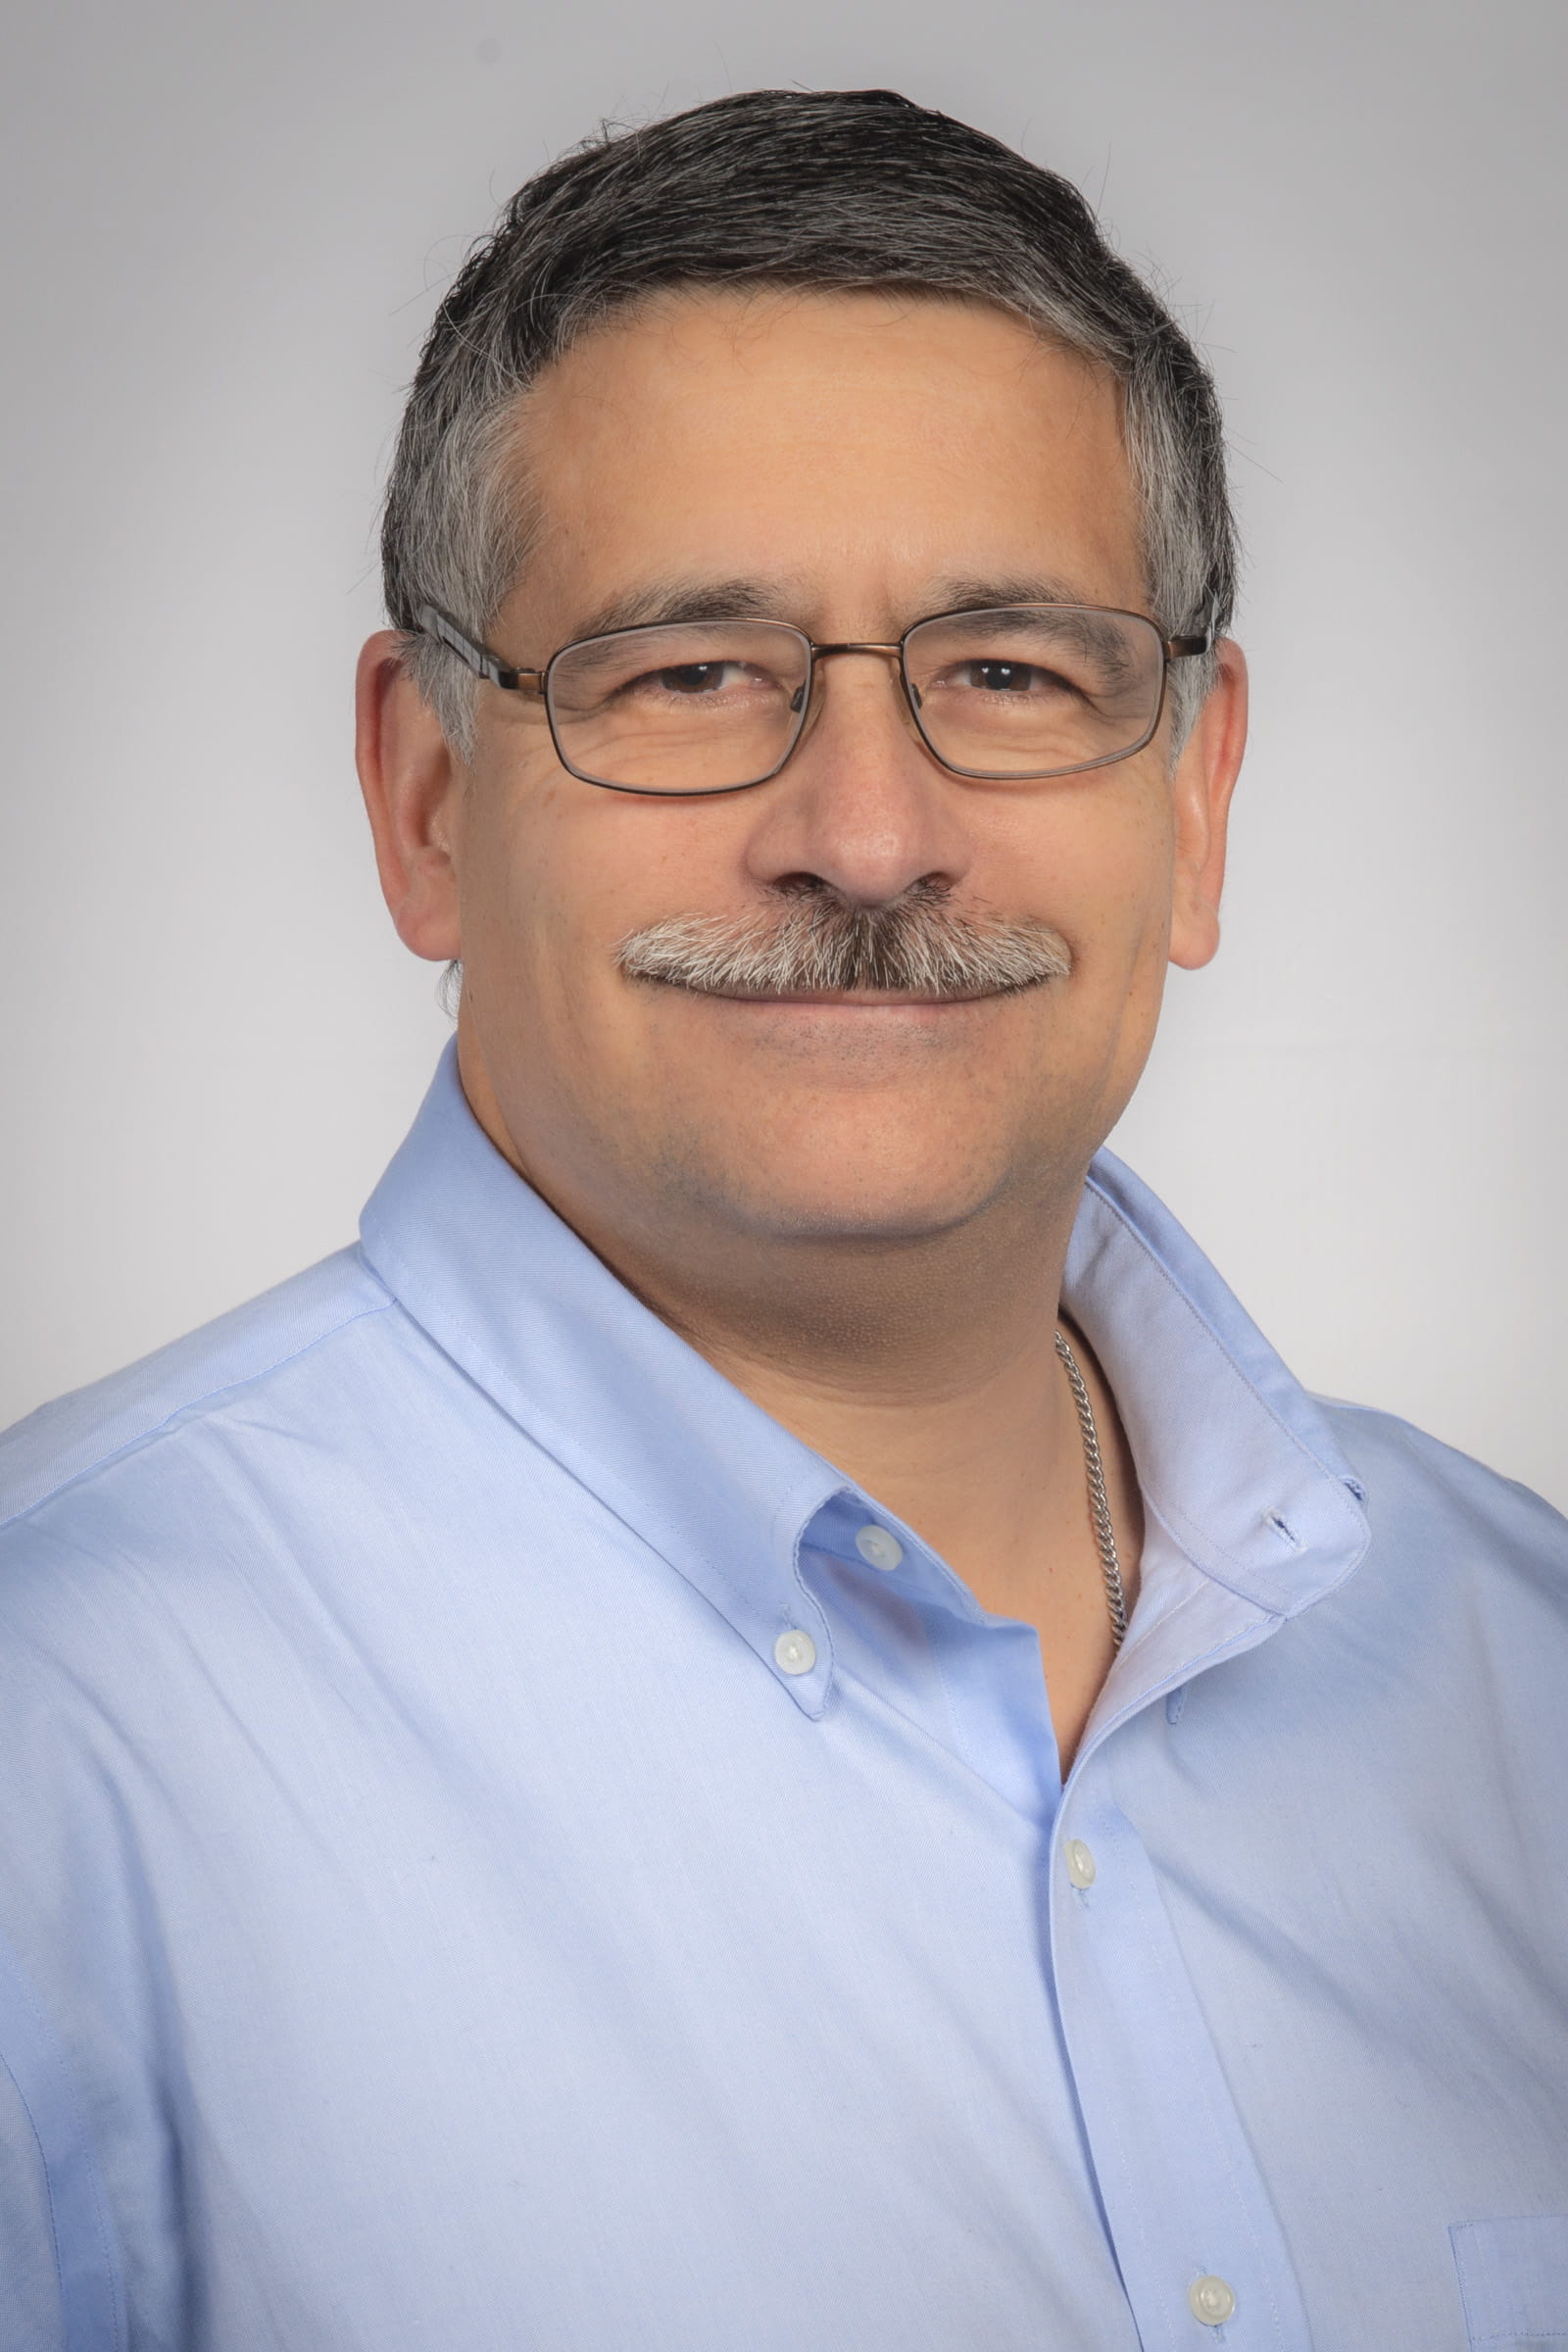 Anthony G. Pietroniro, MD